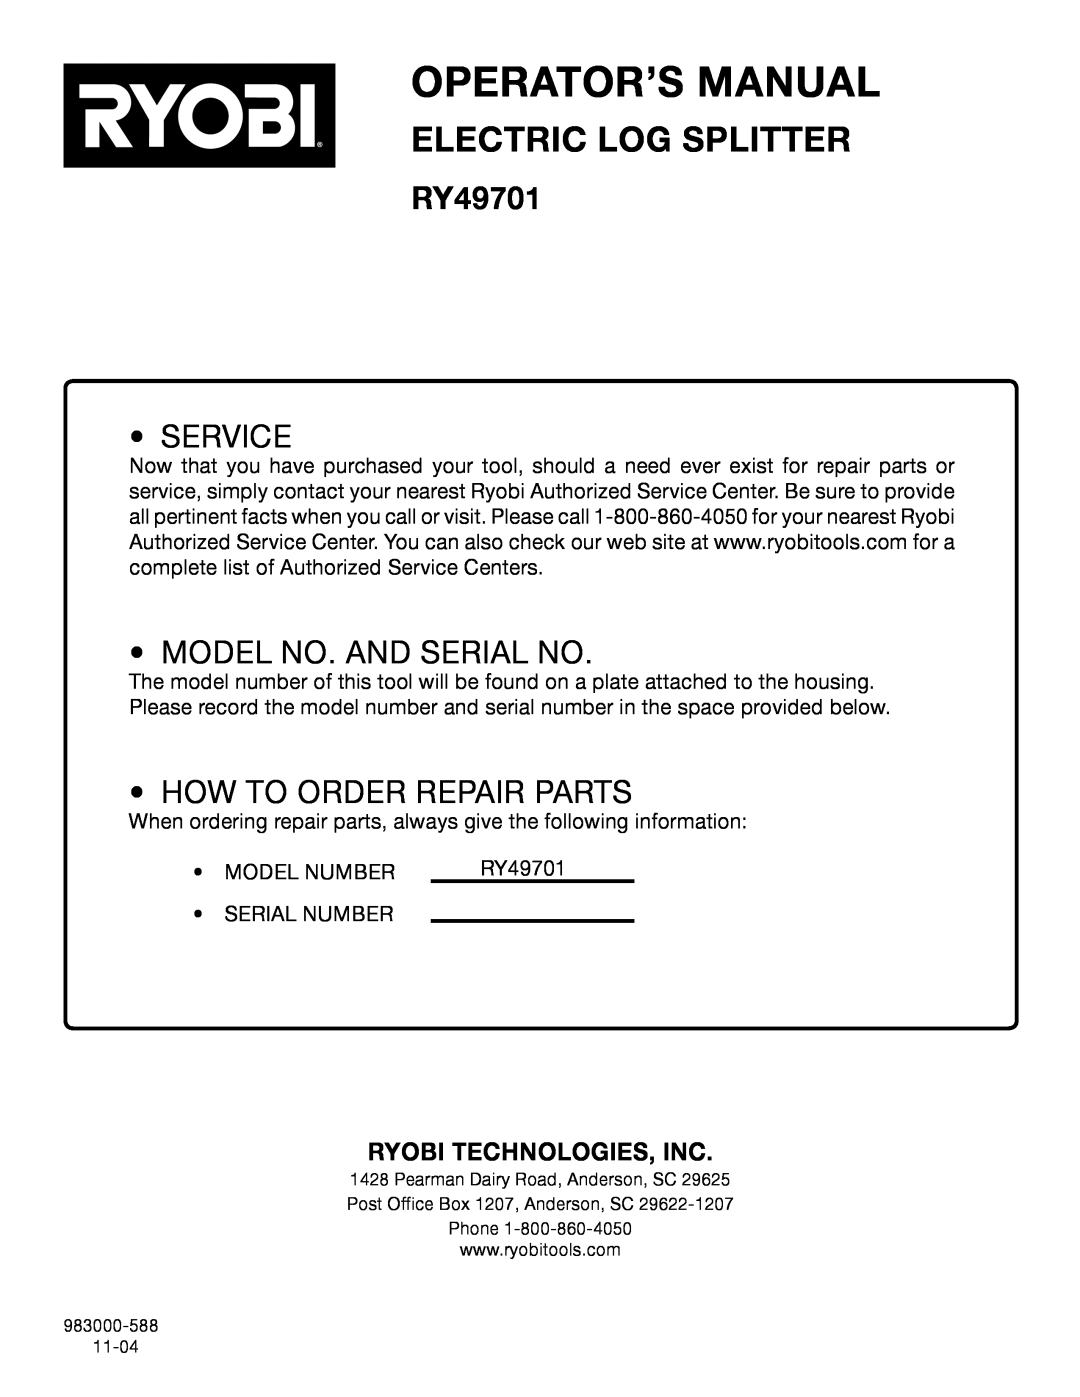 Ryobi Outdoor RY49701 Operator’S Manual, Electric Log Splitter, Service, Model No. And Serial No, Ryobi Technologies, Inc 